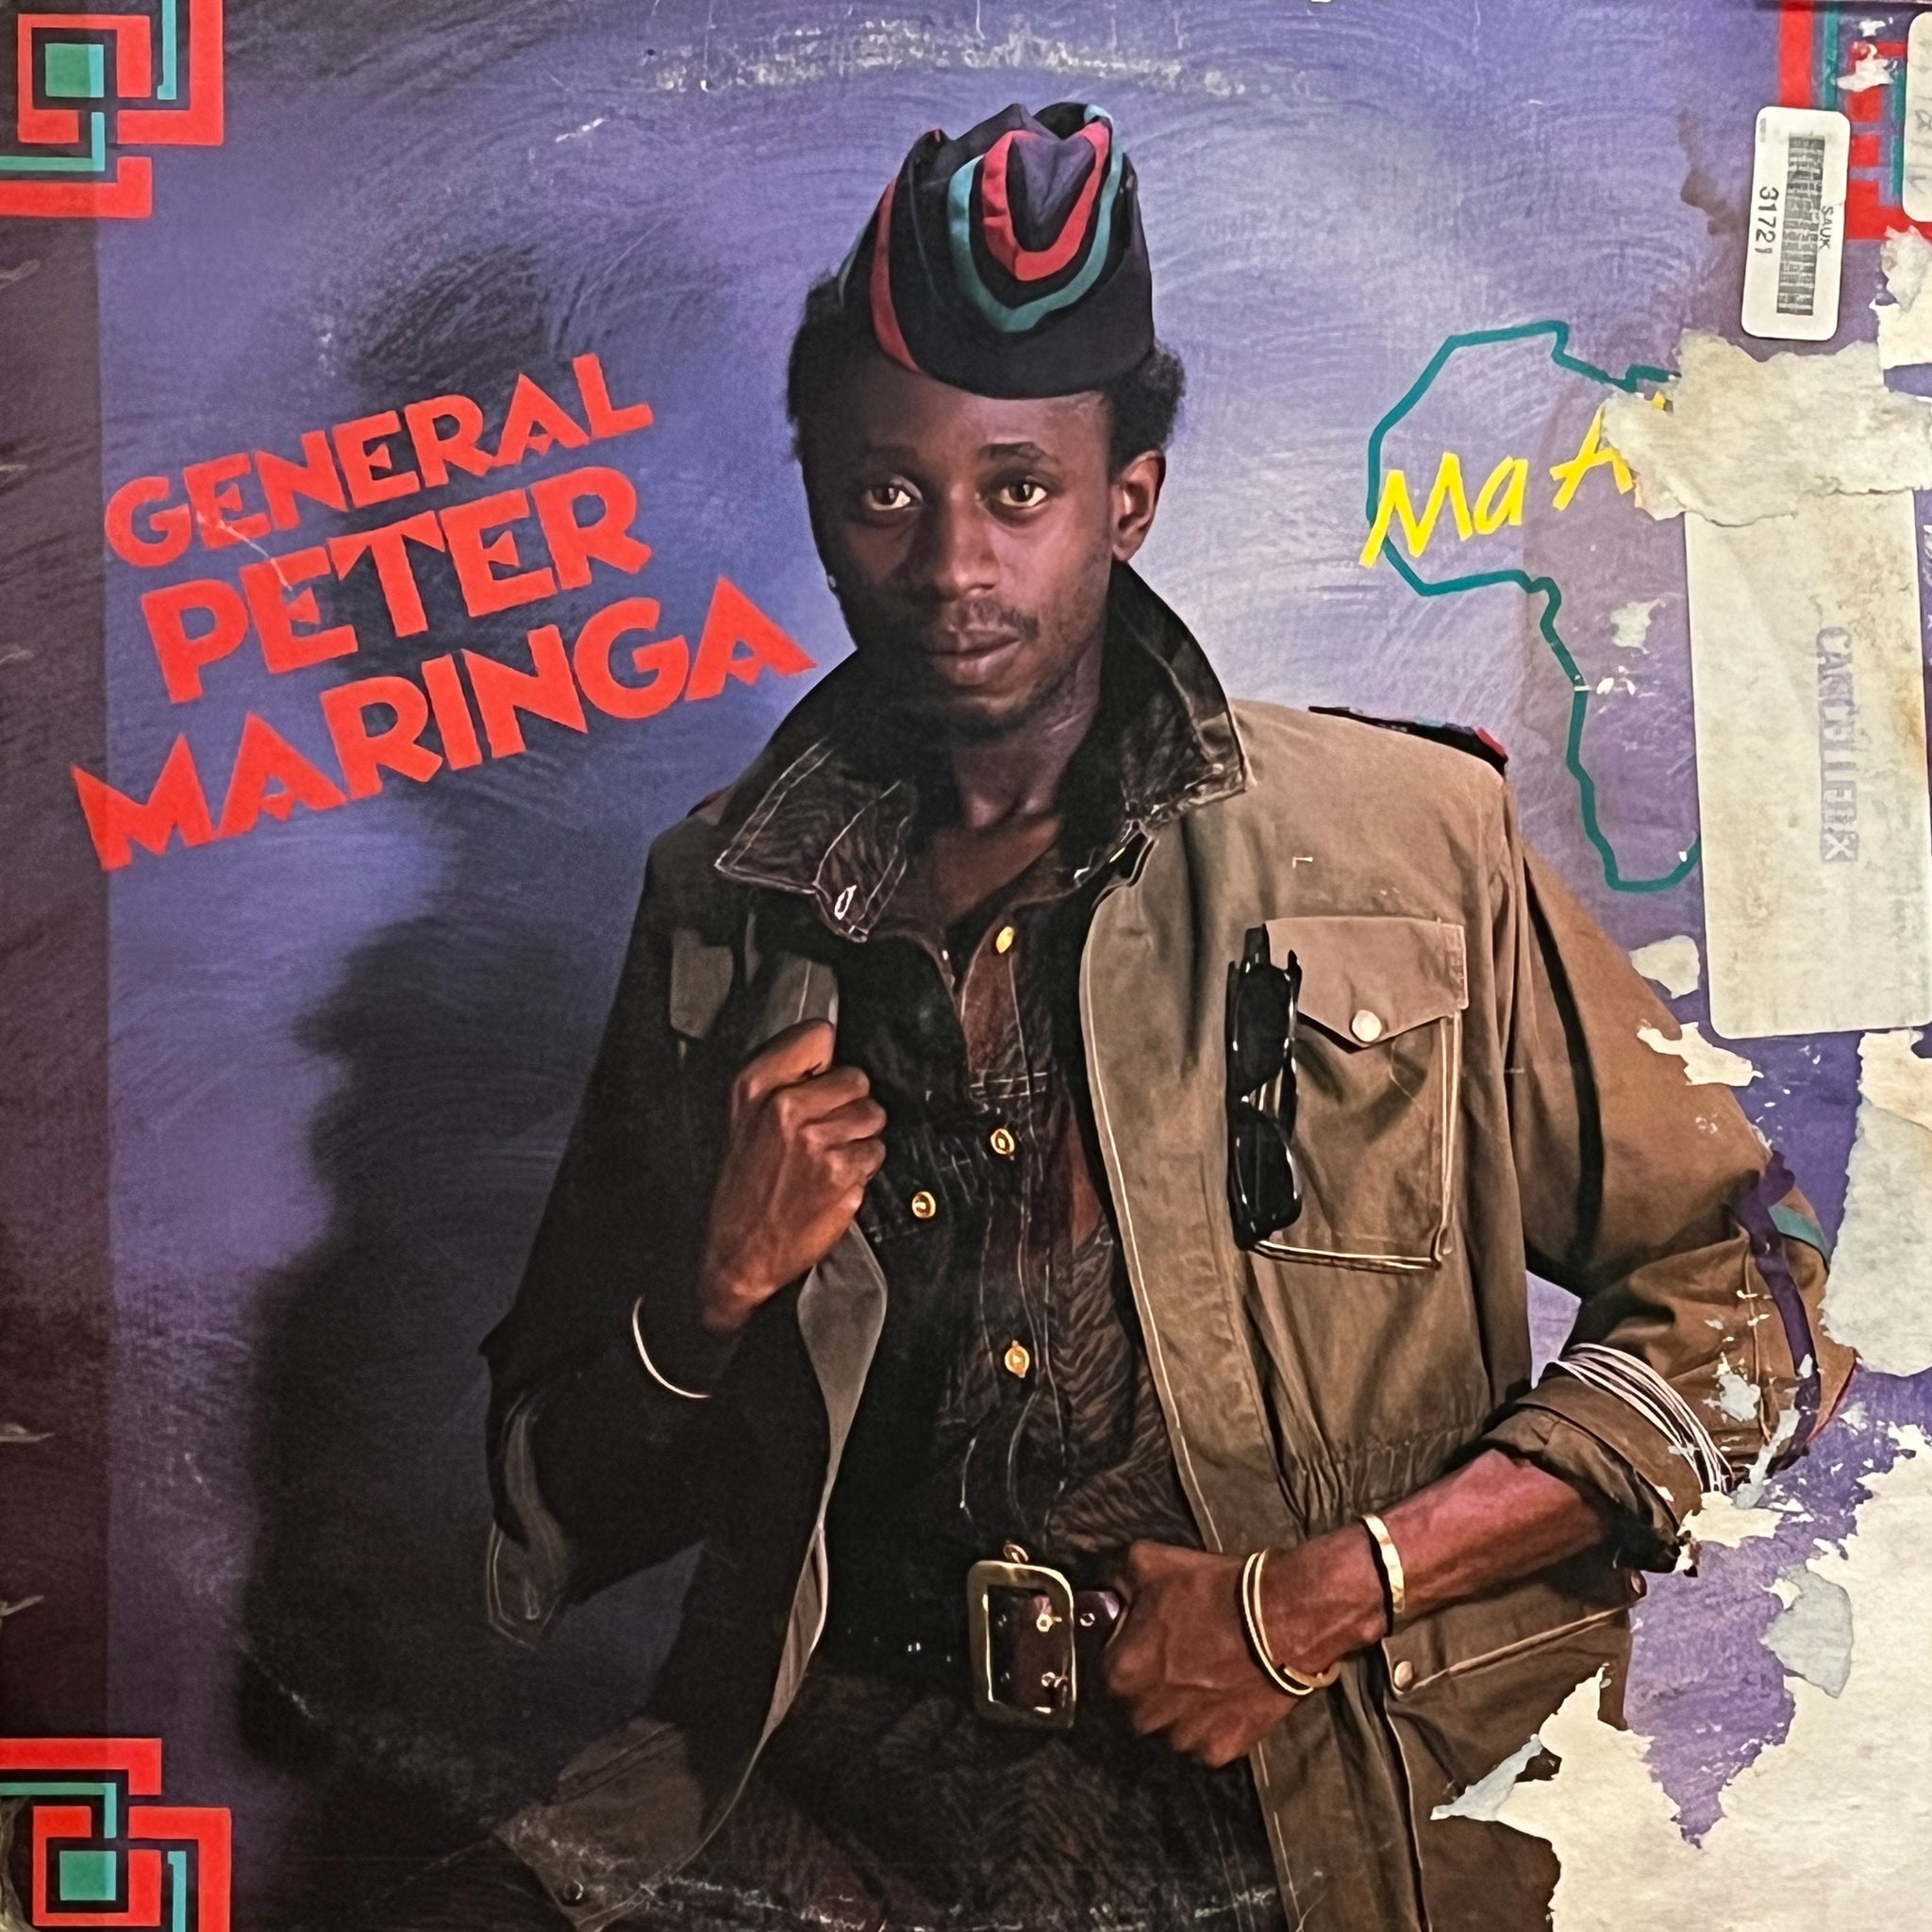 General Peter Maringa – Ma Africa